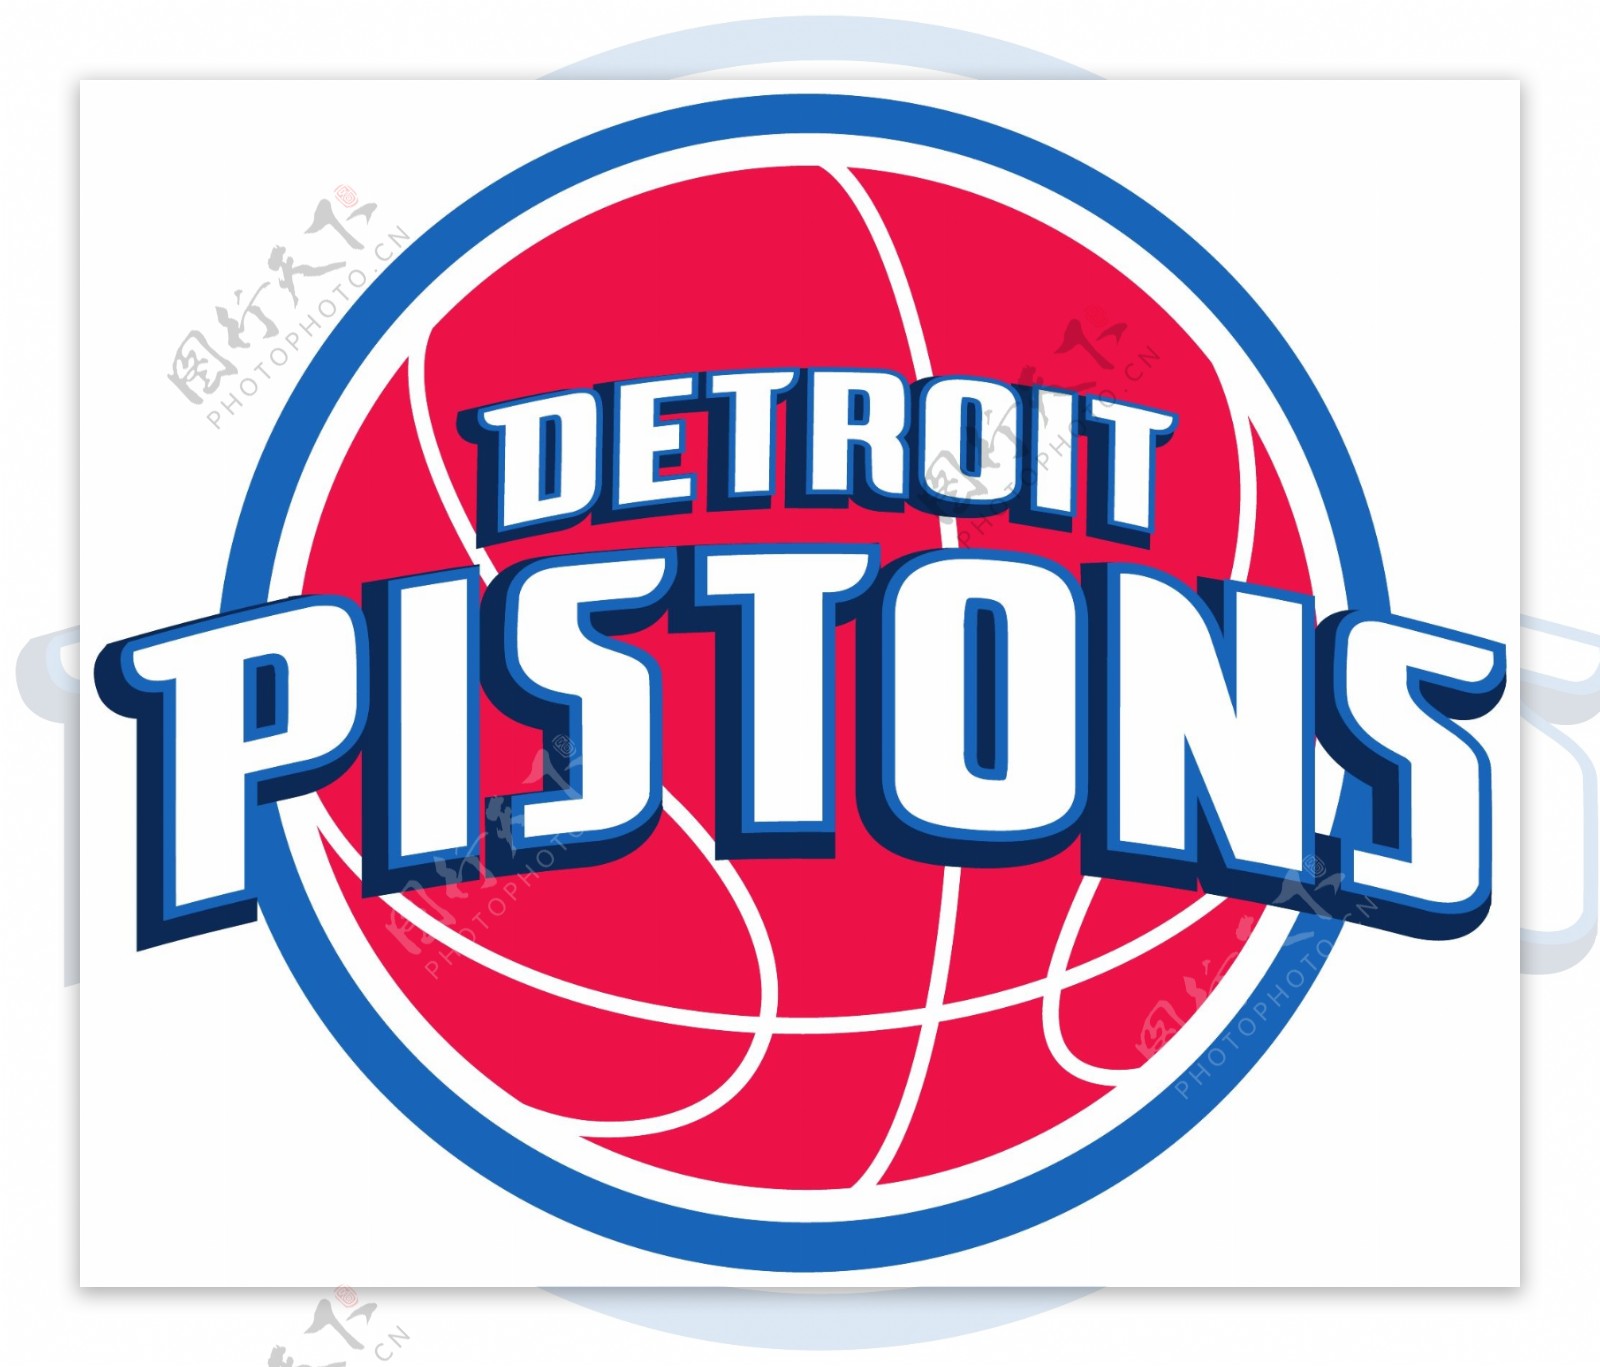 DetroitPistons标志图片